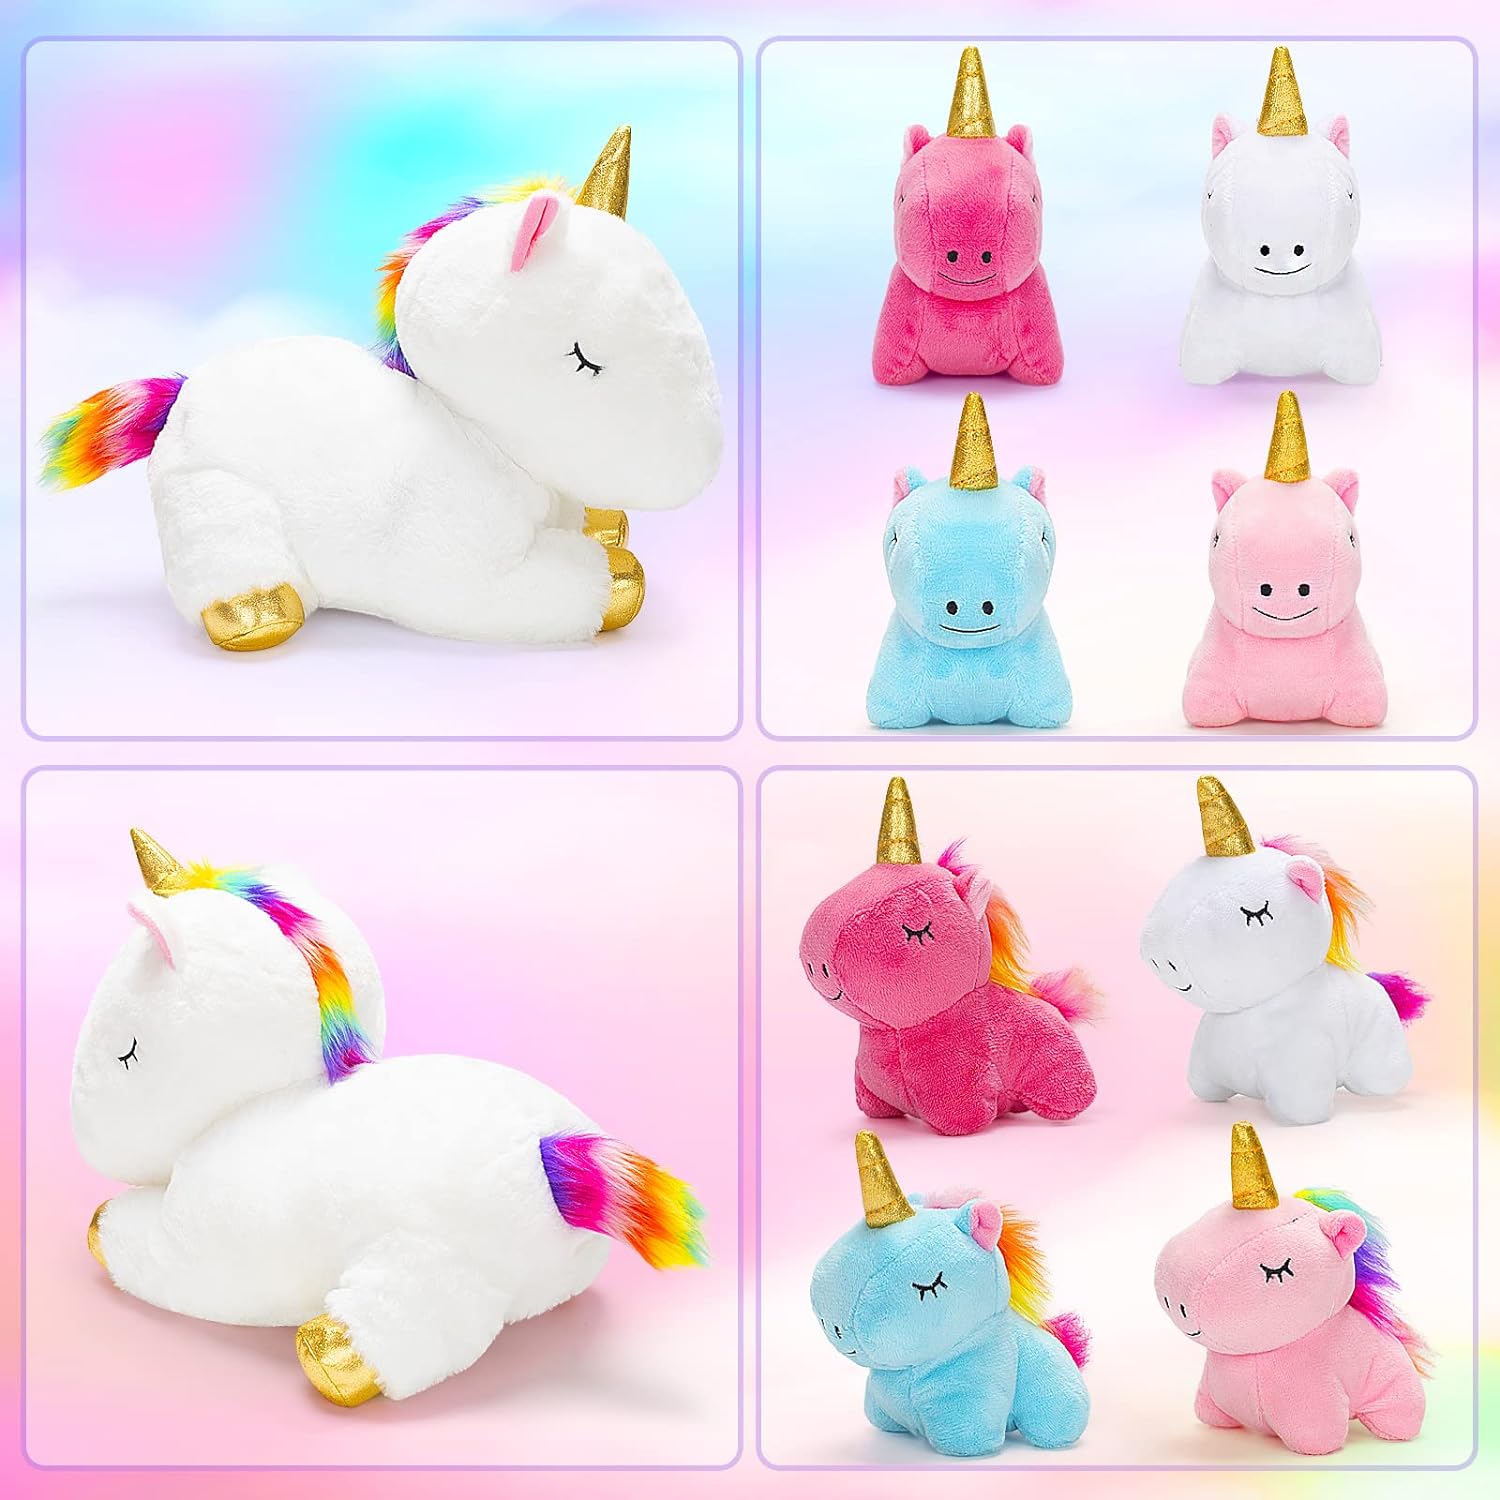 Unicorn Toys for Girls Ages 3 4 5 6 7 8+ Year - Unicorn Mommy Stuffed Animal with 4 Baby Unicorns in Her Tummy - Cykapu